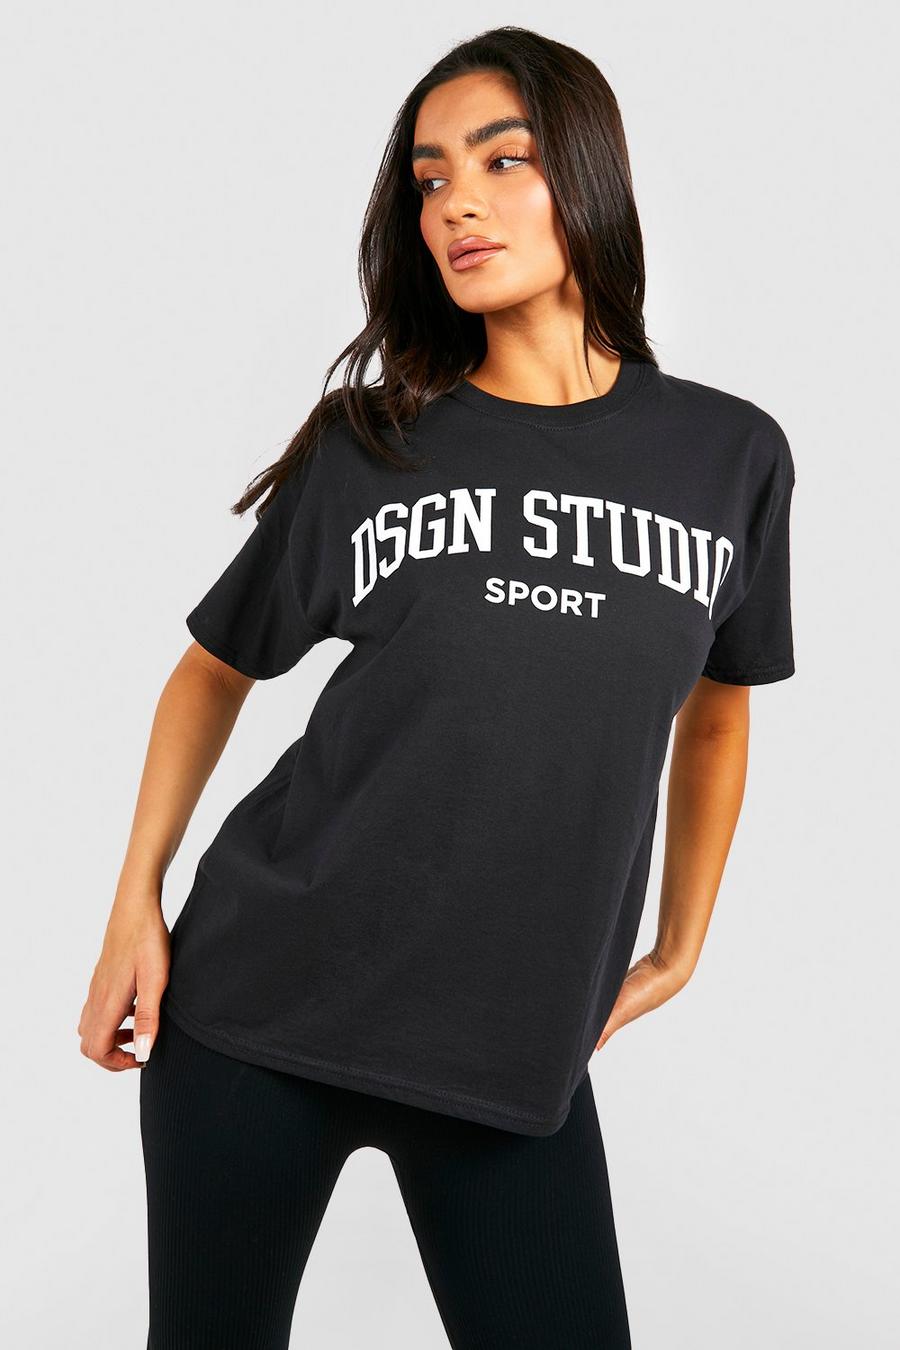 Black Dsgn Studio Sport Slogan Oversized T-shirt image number 1